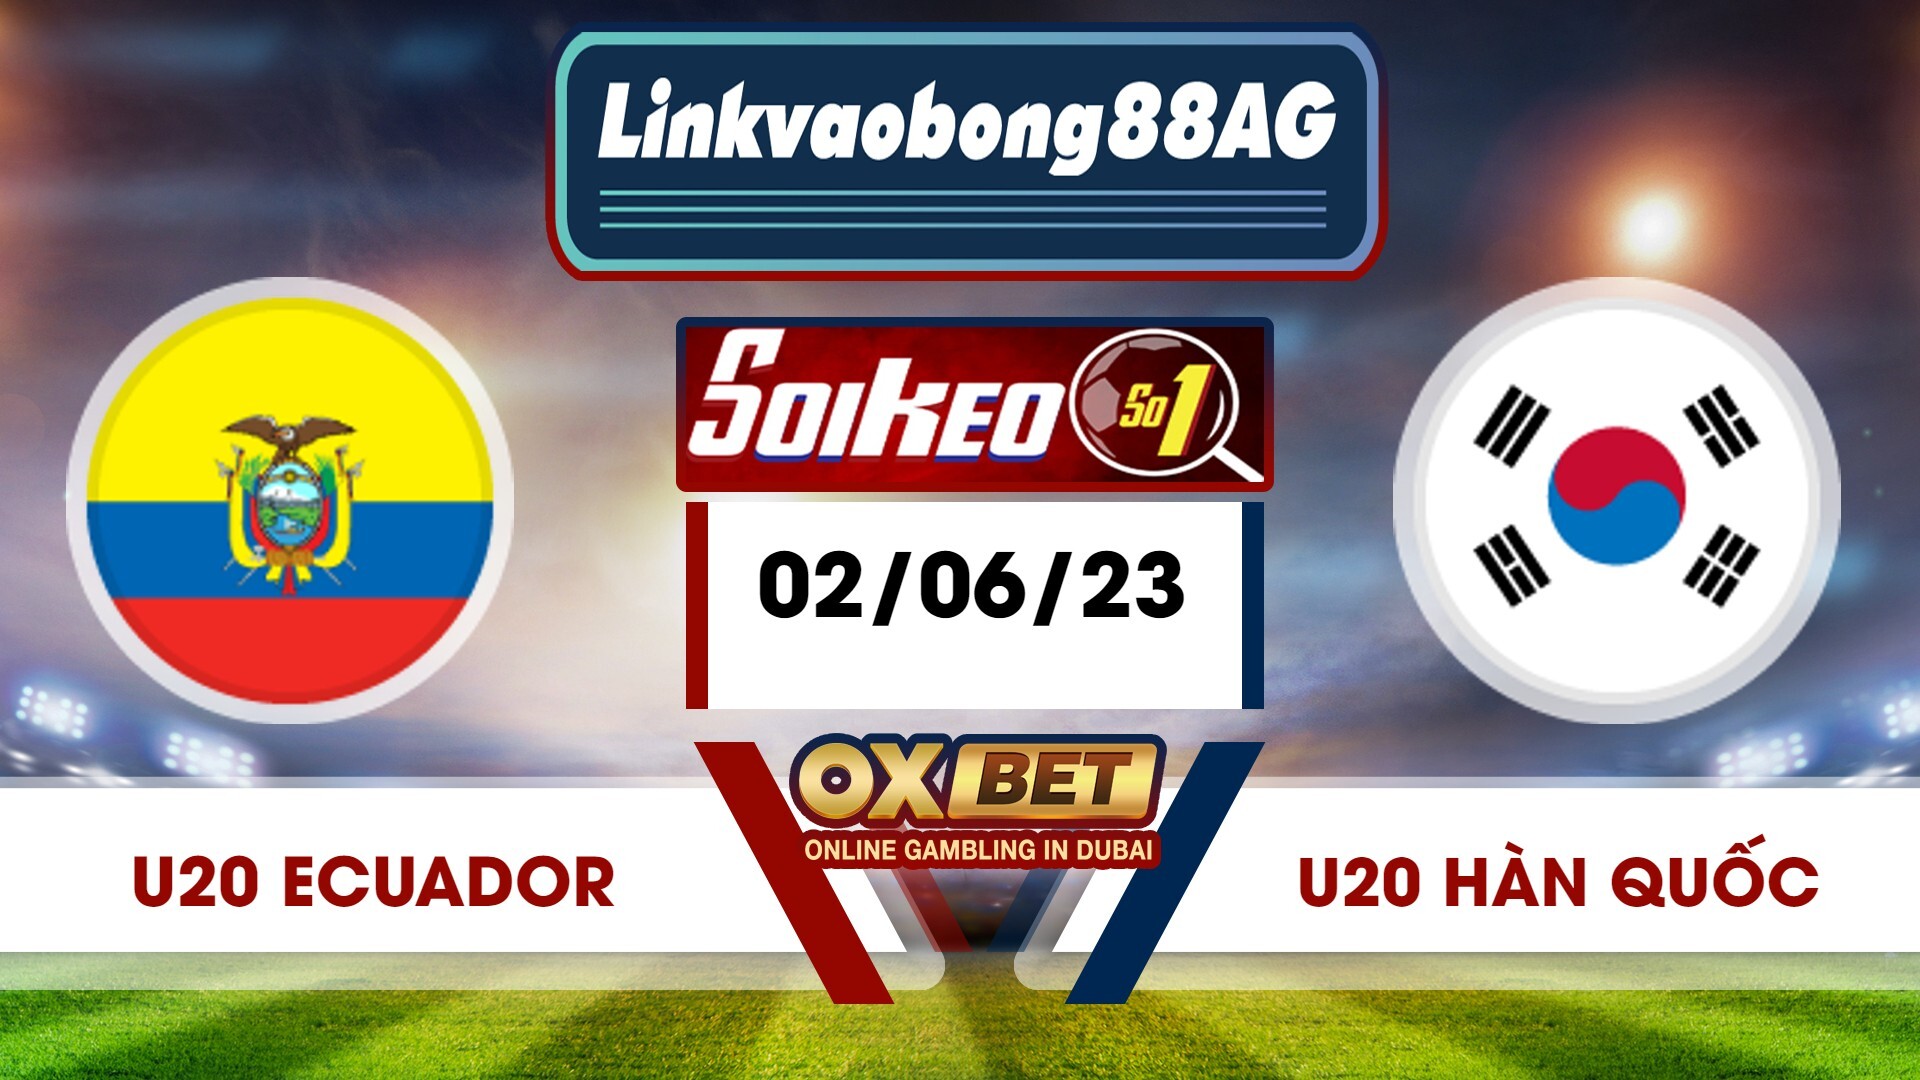 Soi kèo Bong88 U20 Ecuador vs U20 Hàn Quốc – 02/06/2023 – 04h00 sáng